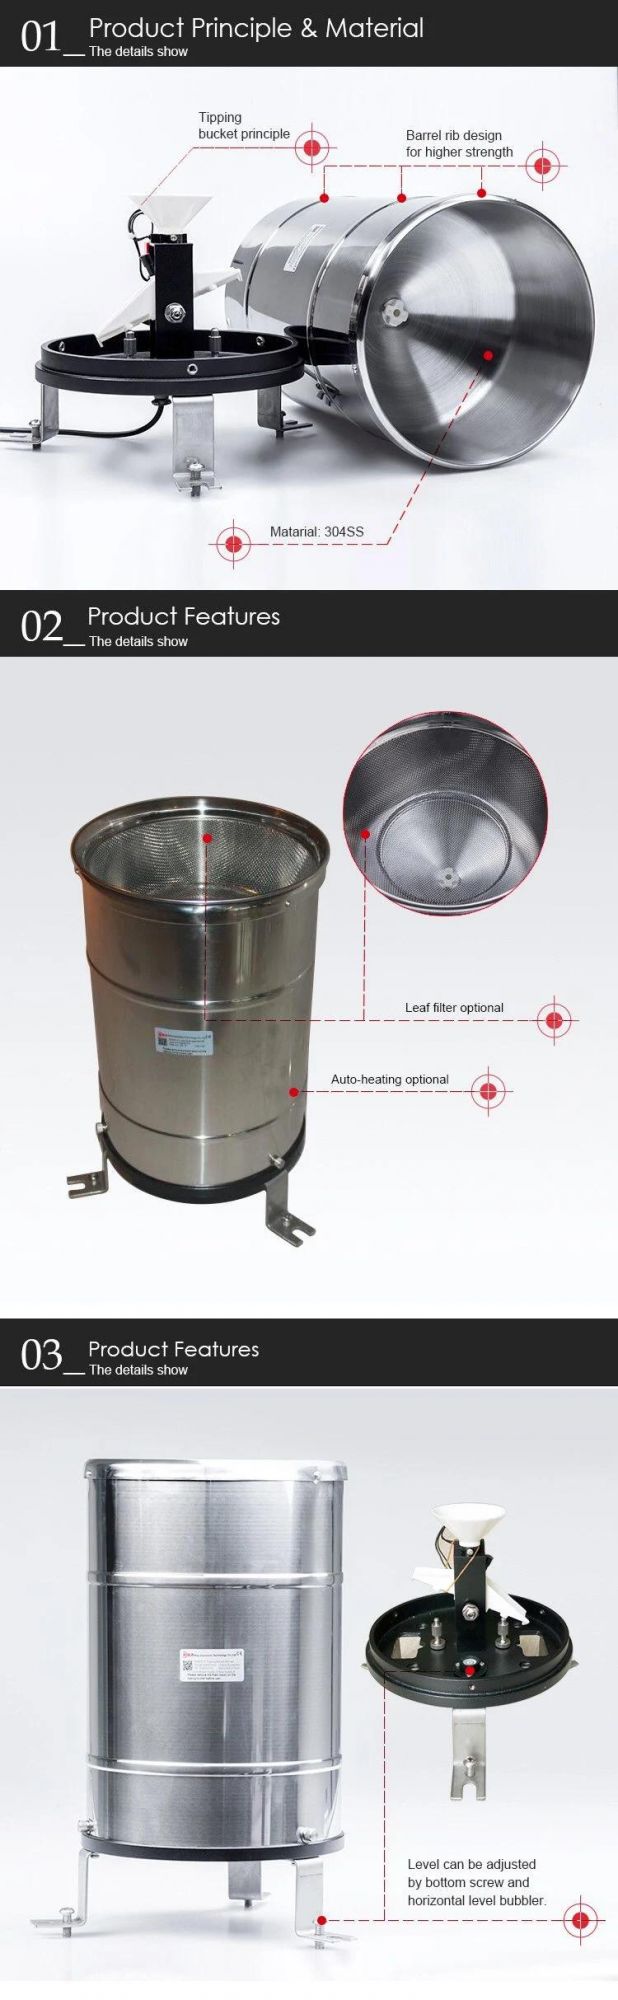 Rika Rk400-01 Digital Metal Tipping Bucket Rain Gauges Rainfall Meter Detectors Sensor RS485